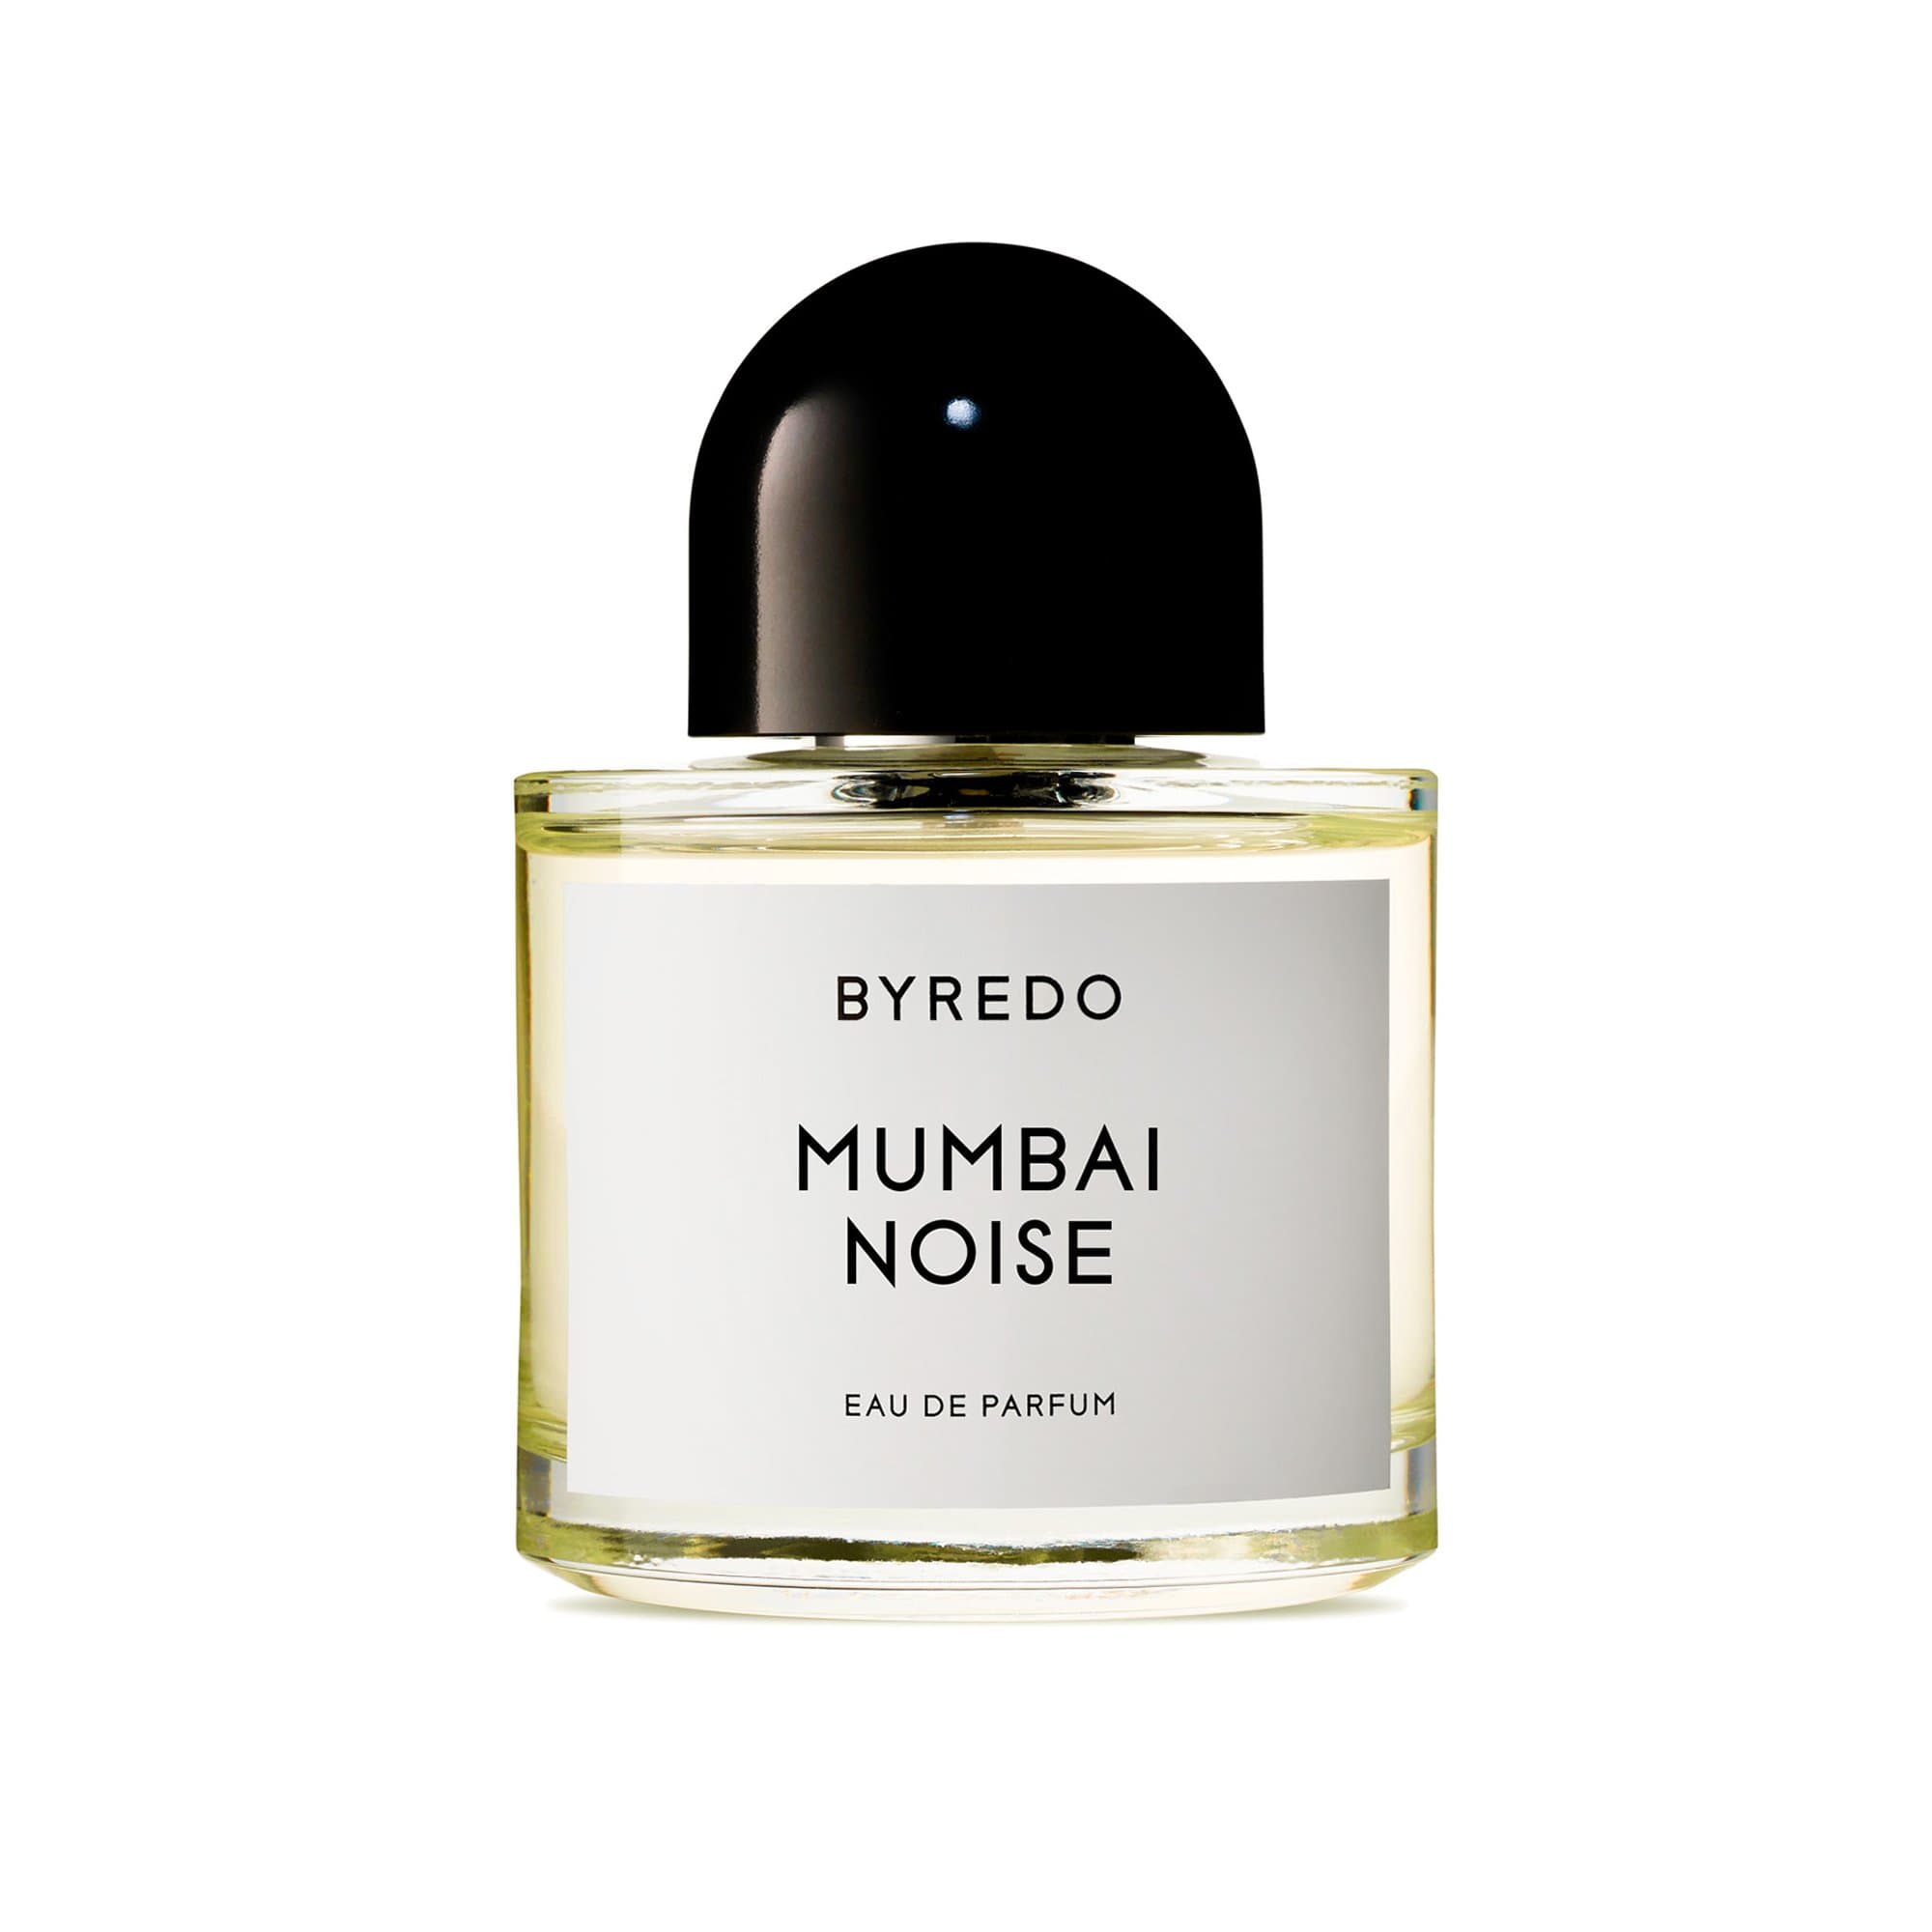 Mumbai Noise de BYREDO Eau de Parfum